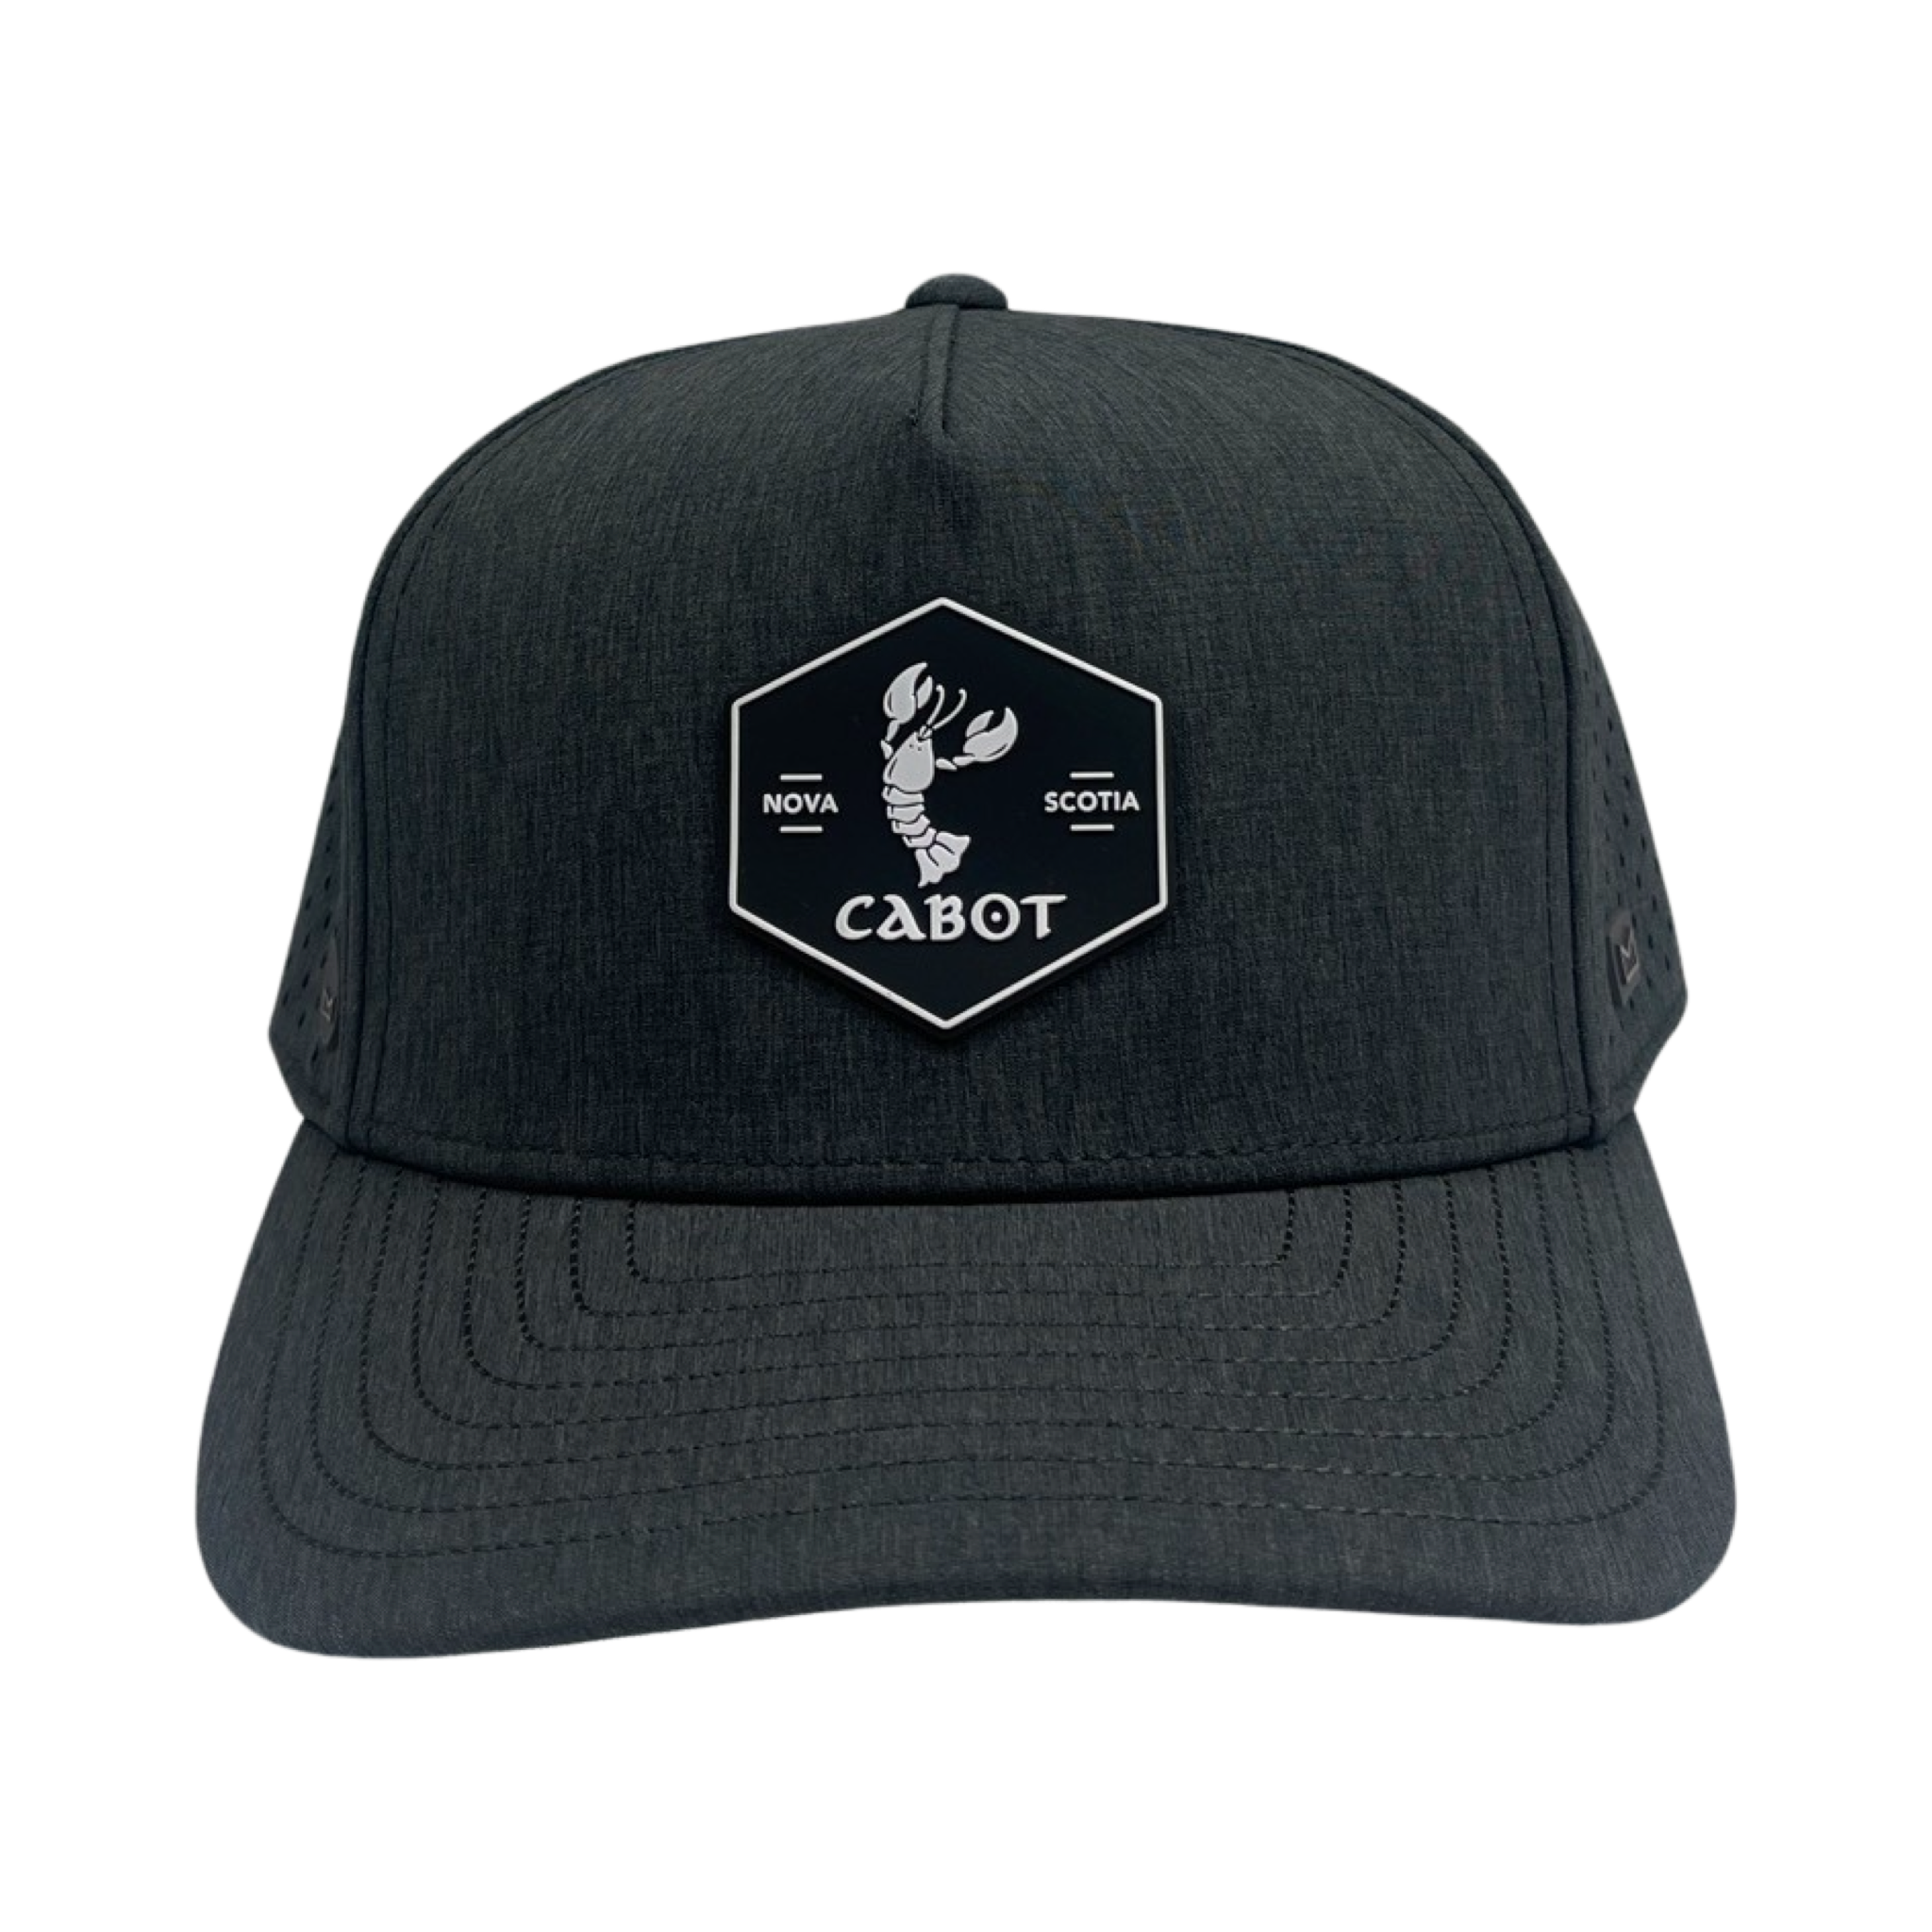 Melin Cabot Cliffs Odyssey Hydro Hat